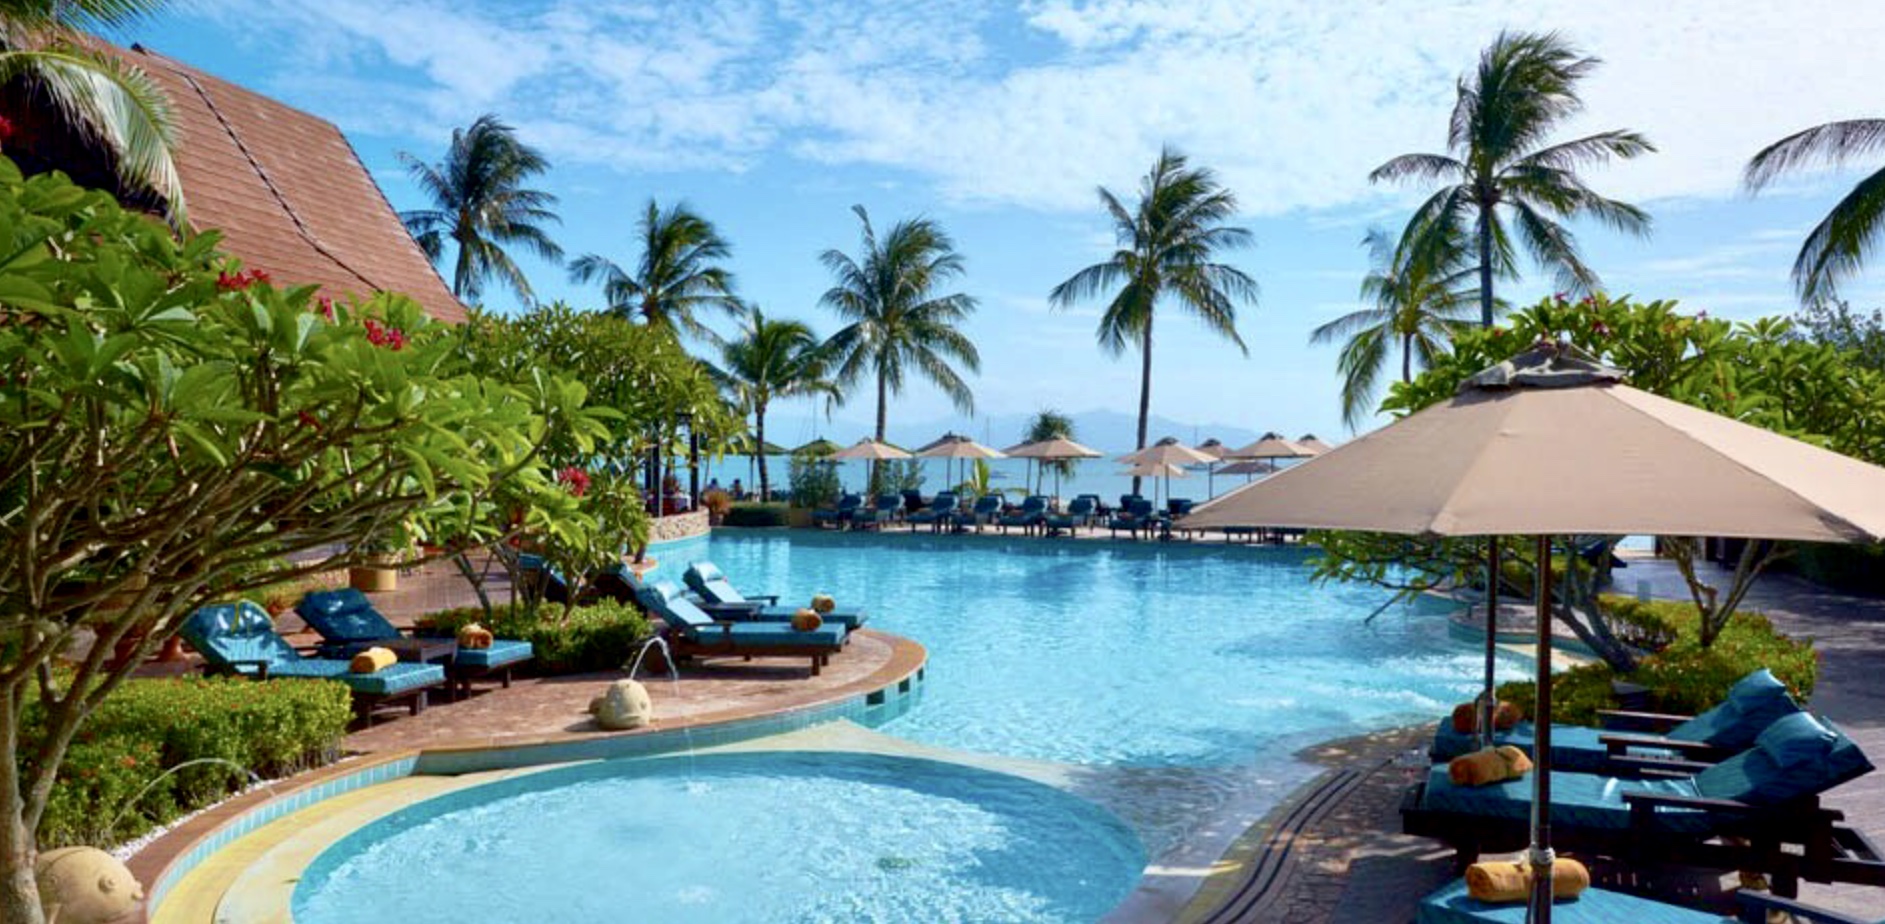 4. Bo Phut Resort & Spa pool – Copy